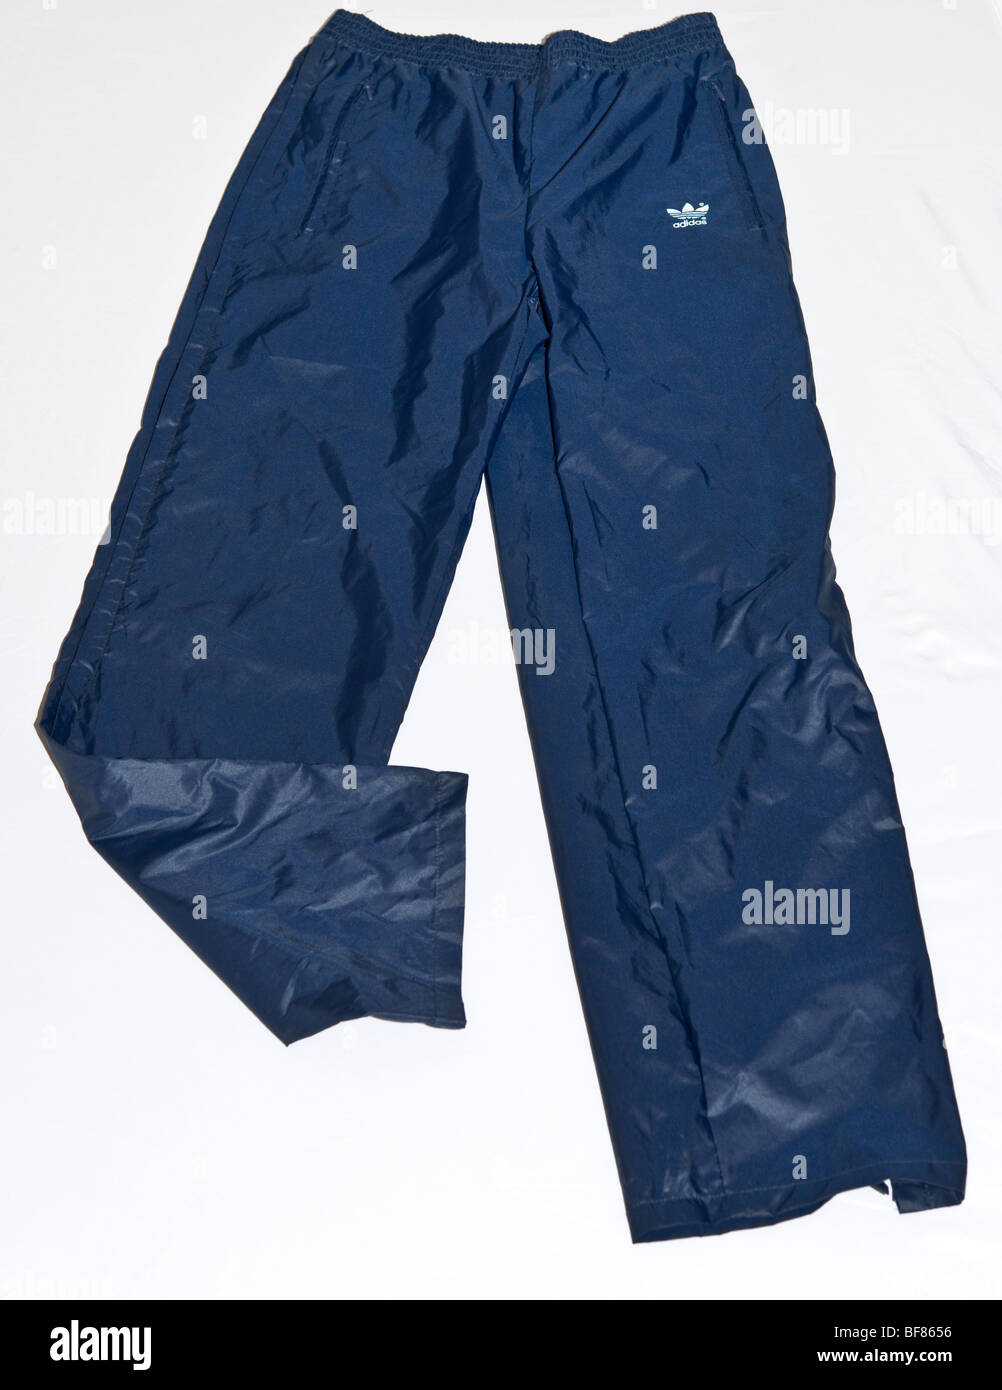 Adidas waterproof nylon tracskuit trousers bottoms. Adidas Trefoil logo. Sportswear branded menswear clothing. Stock Photo